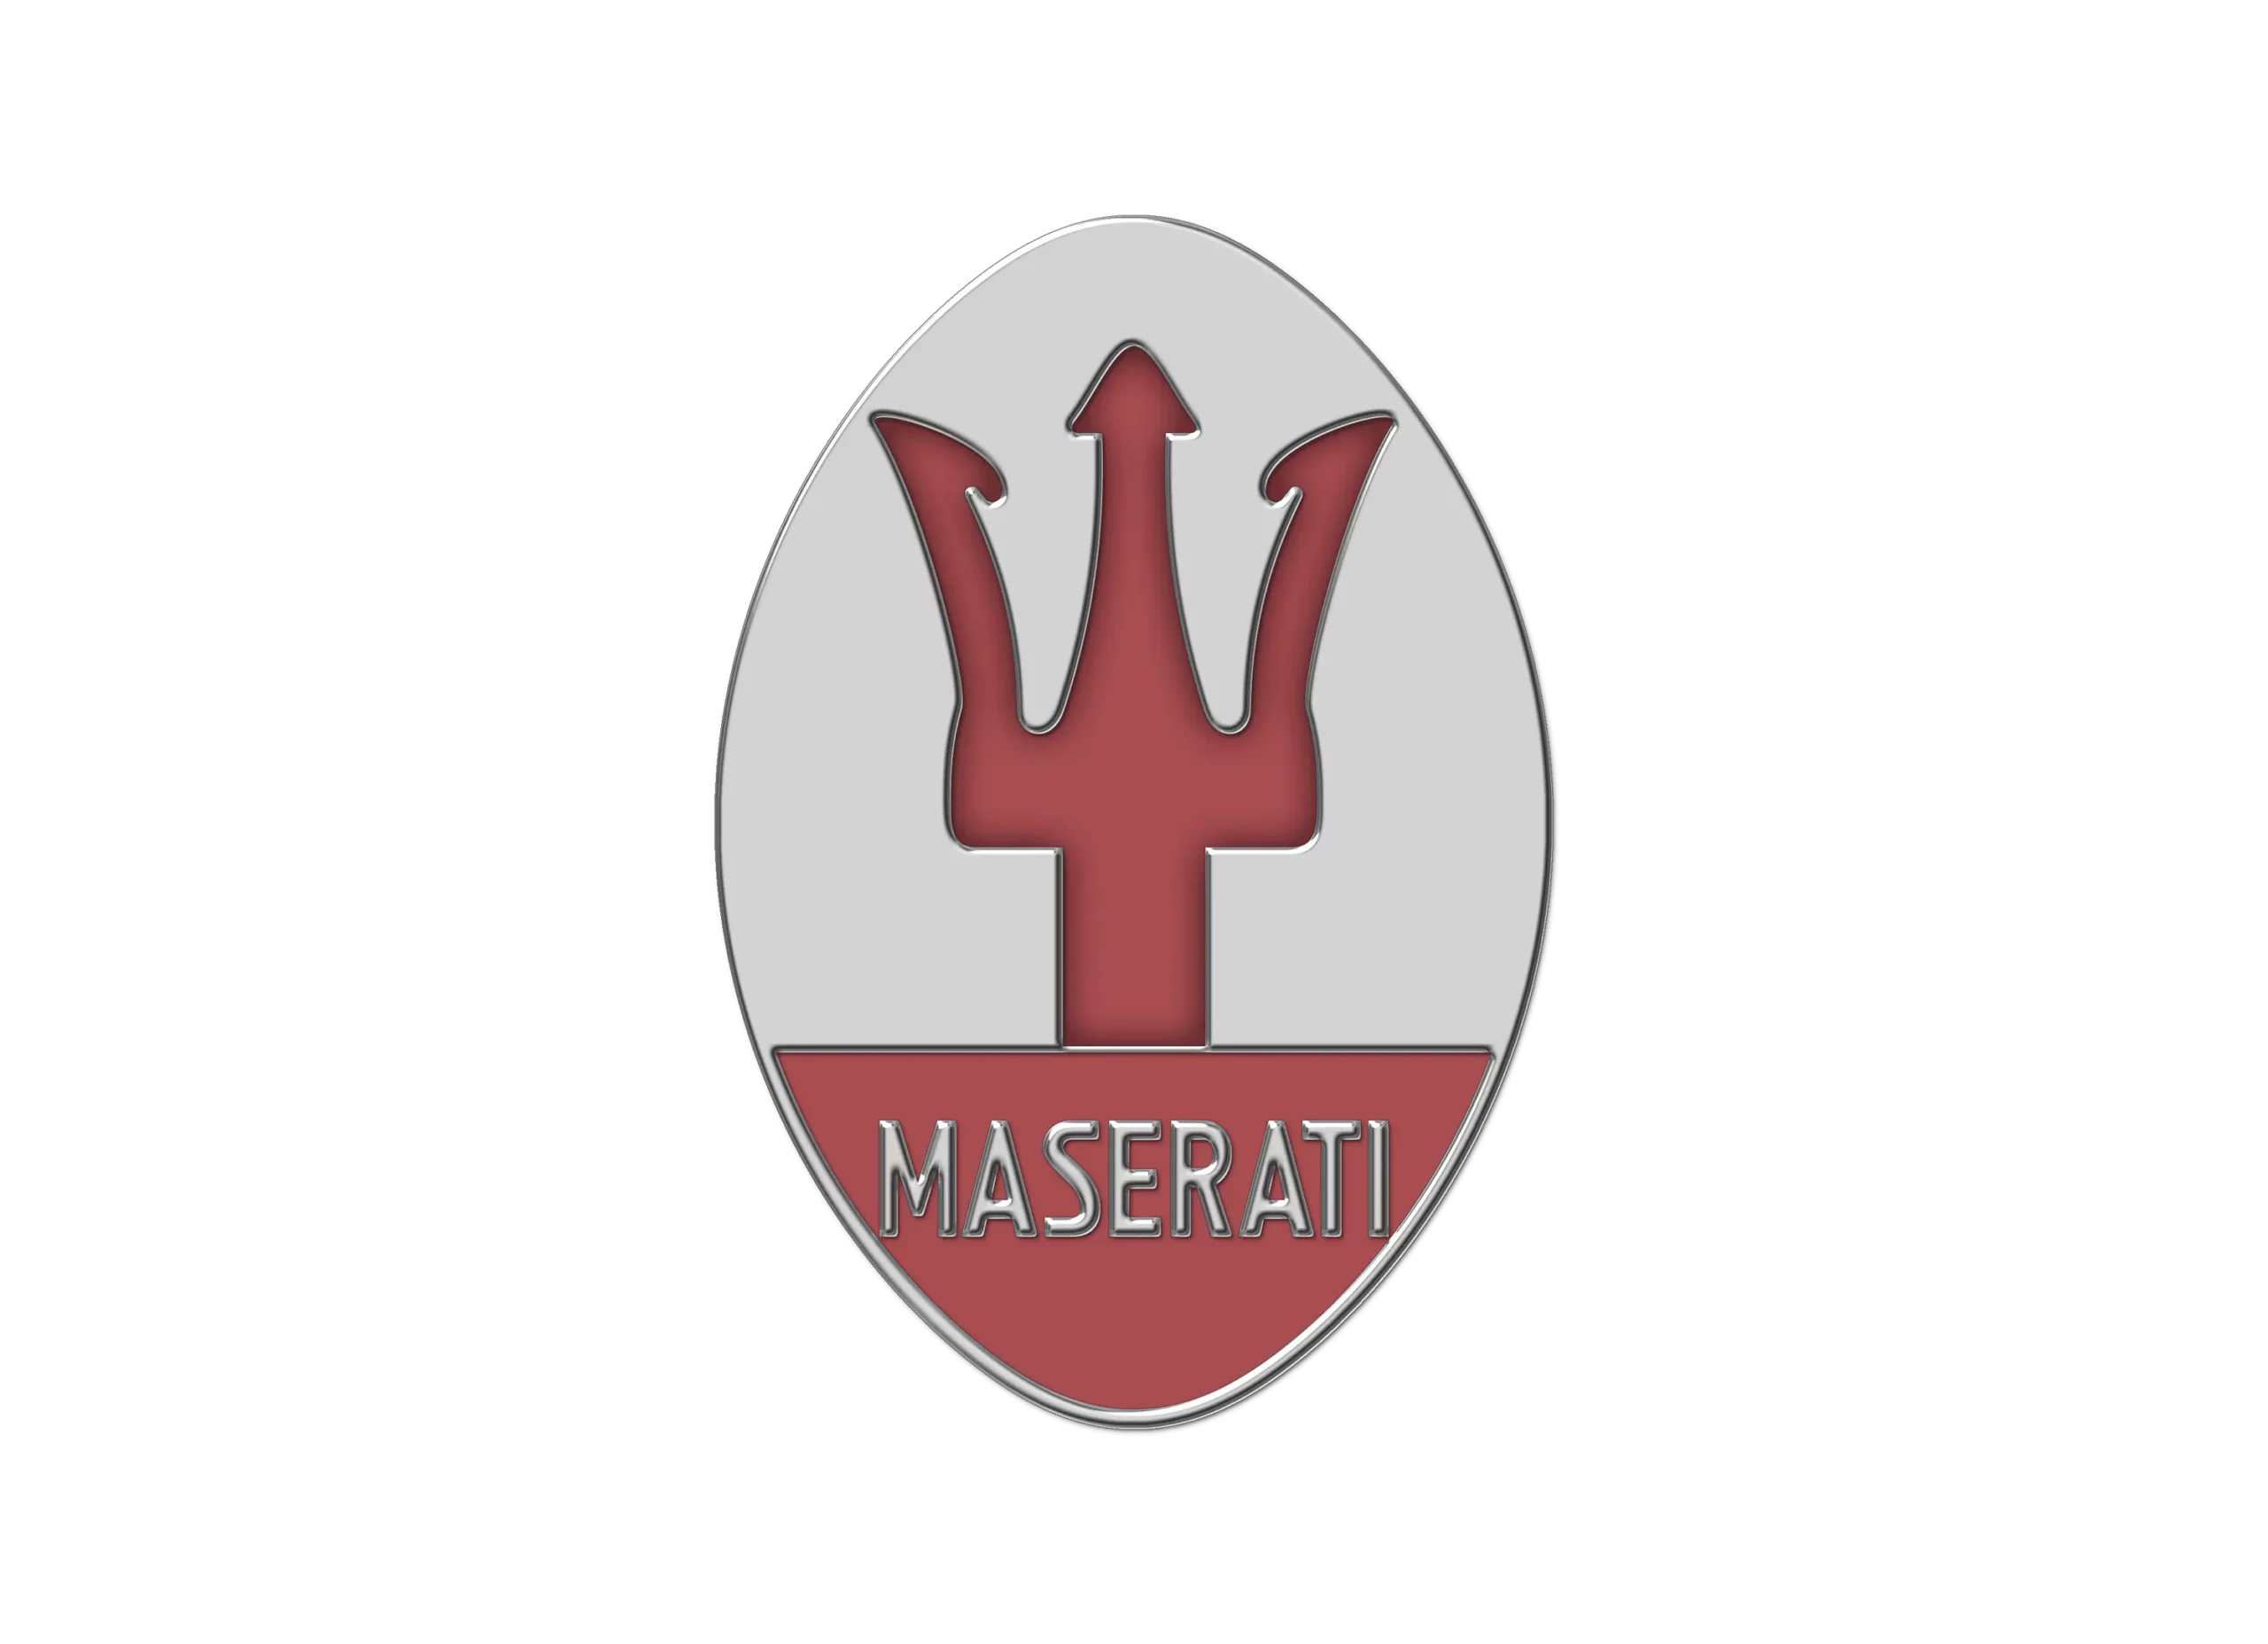 Maserati logo 1937-1943